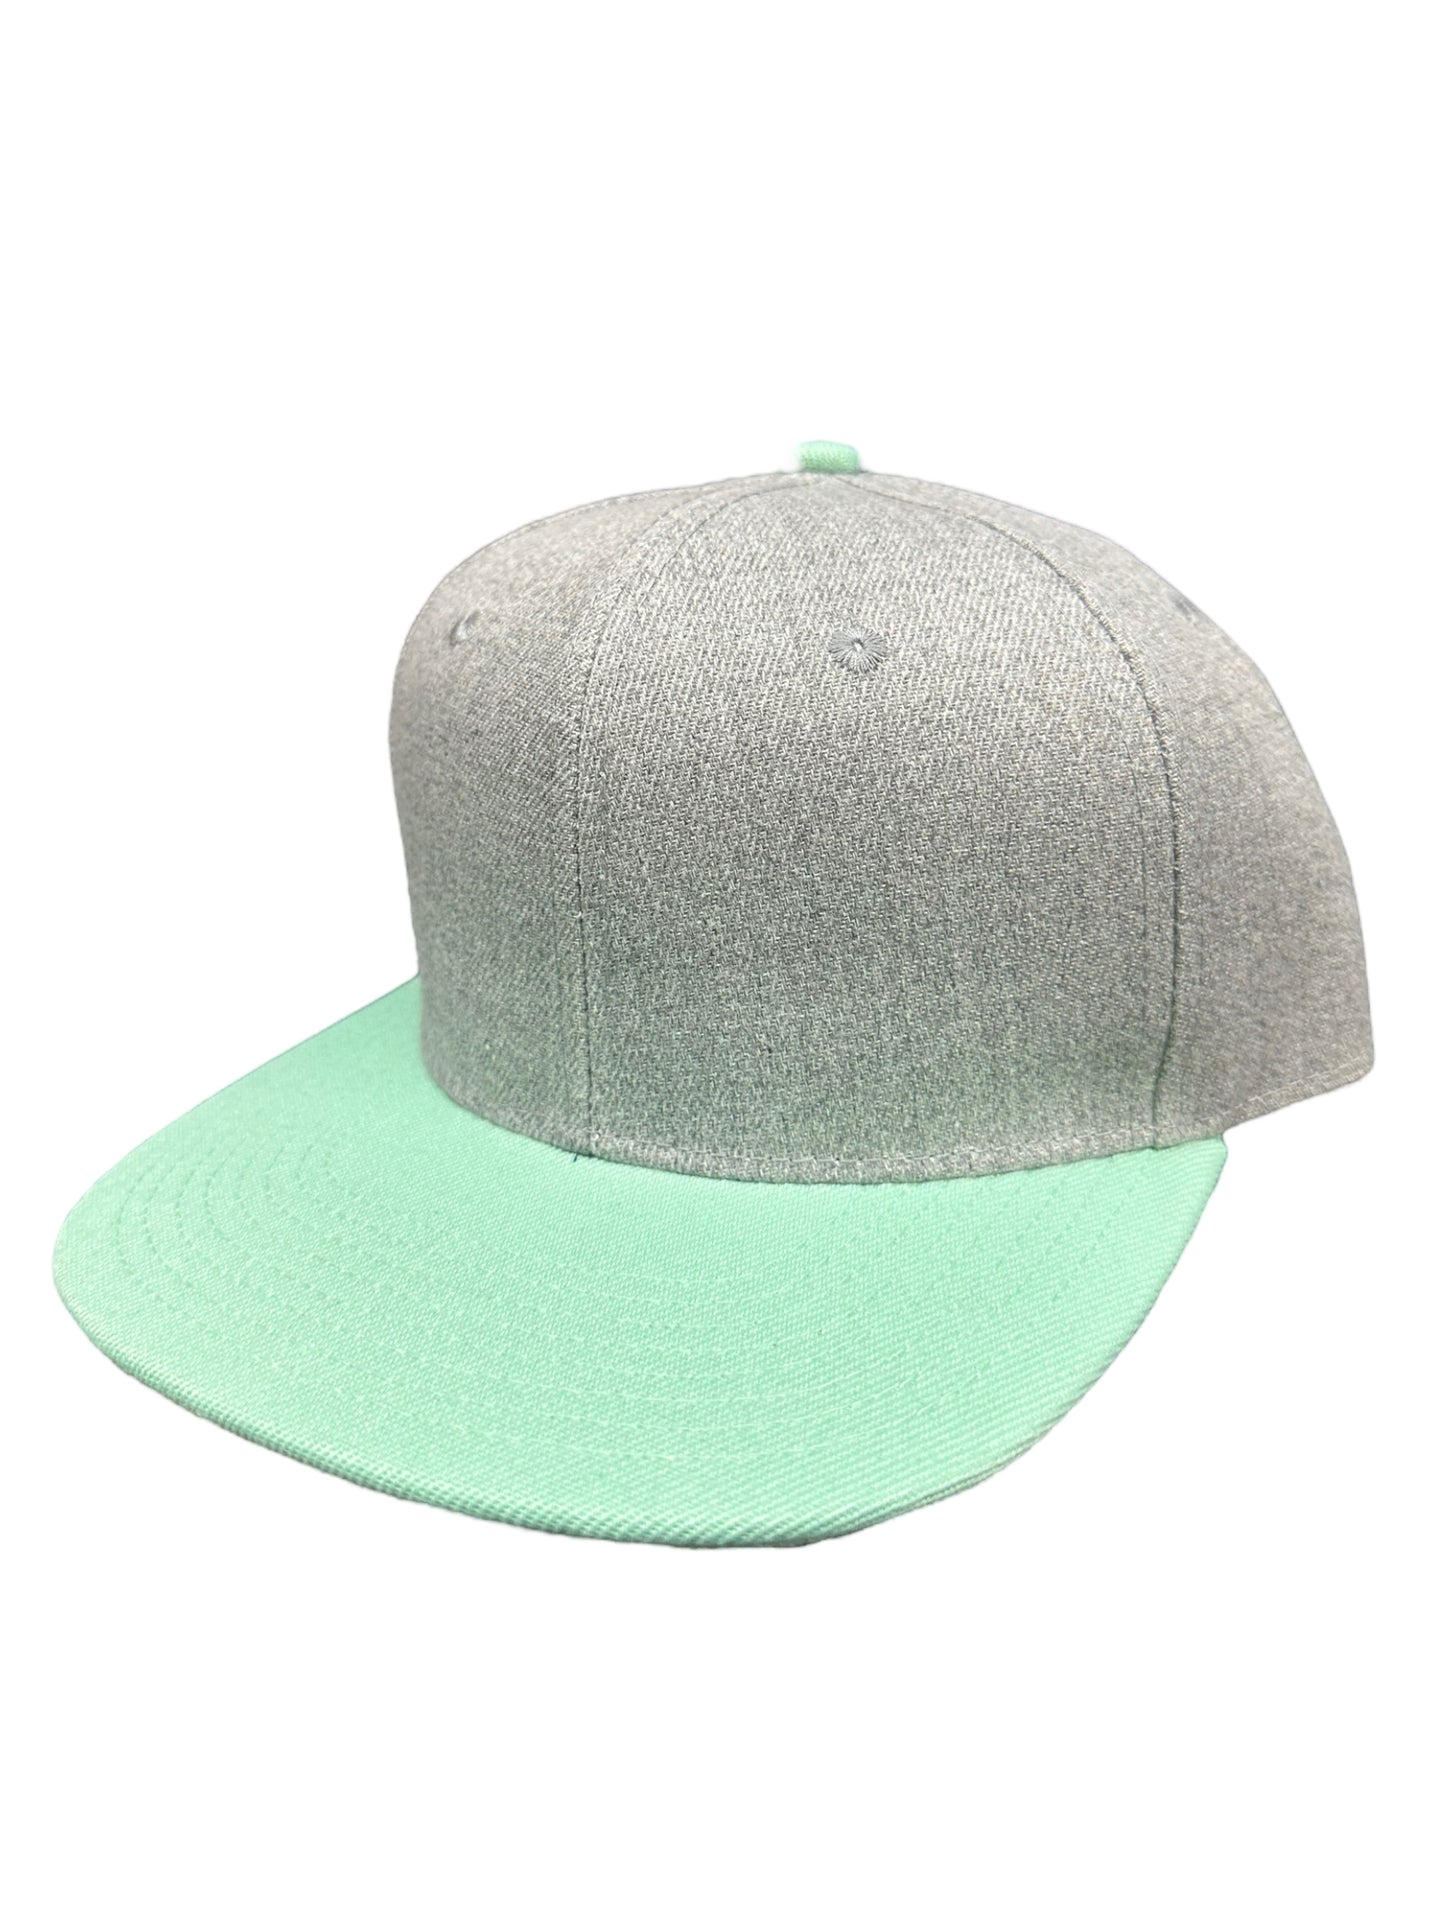 Mint & Light Grey SnapBack hat